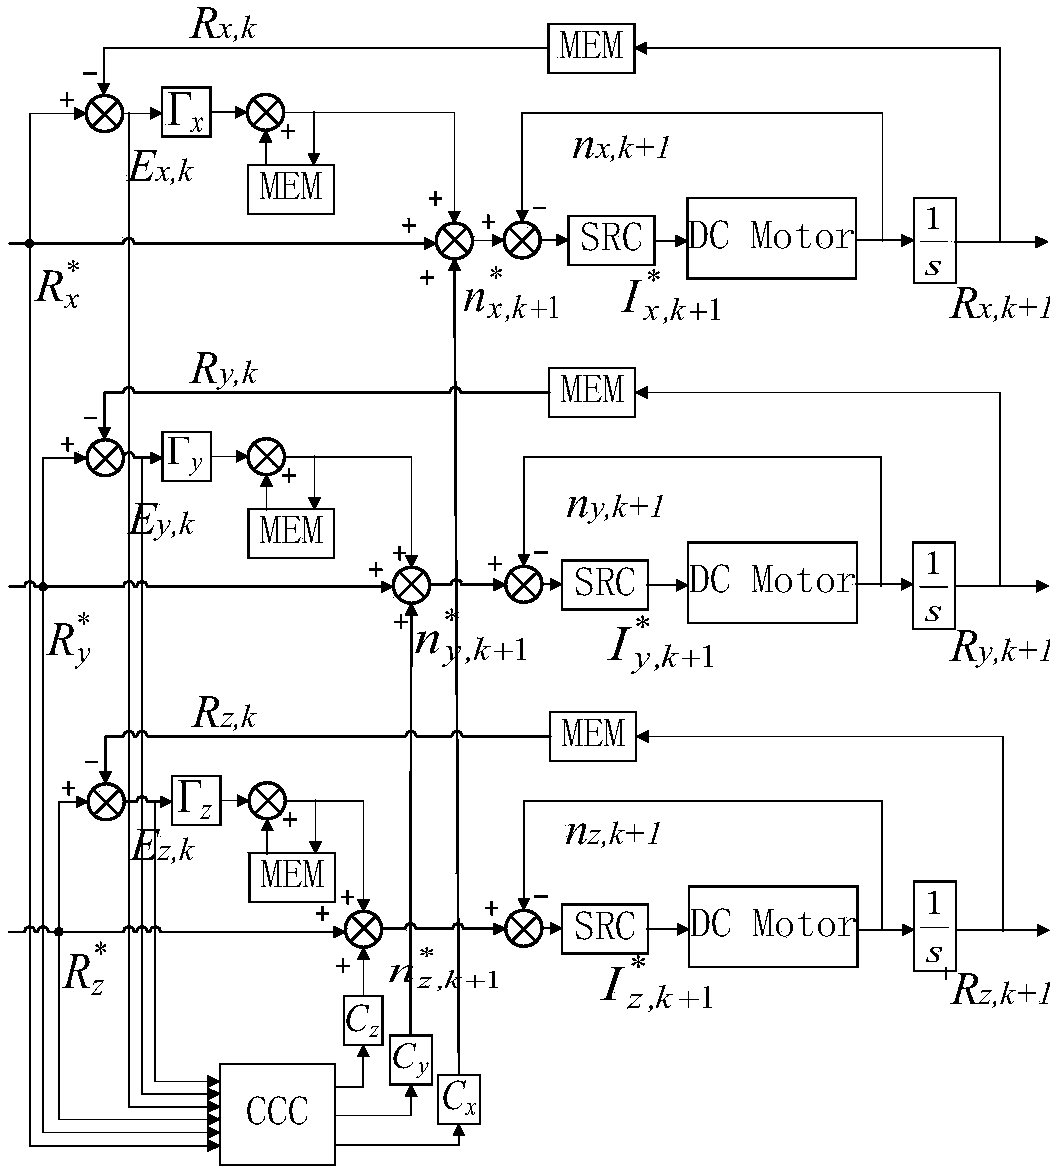 Rectangular coordinate robot iteration sliding mode cross coupling control method